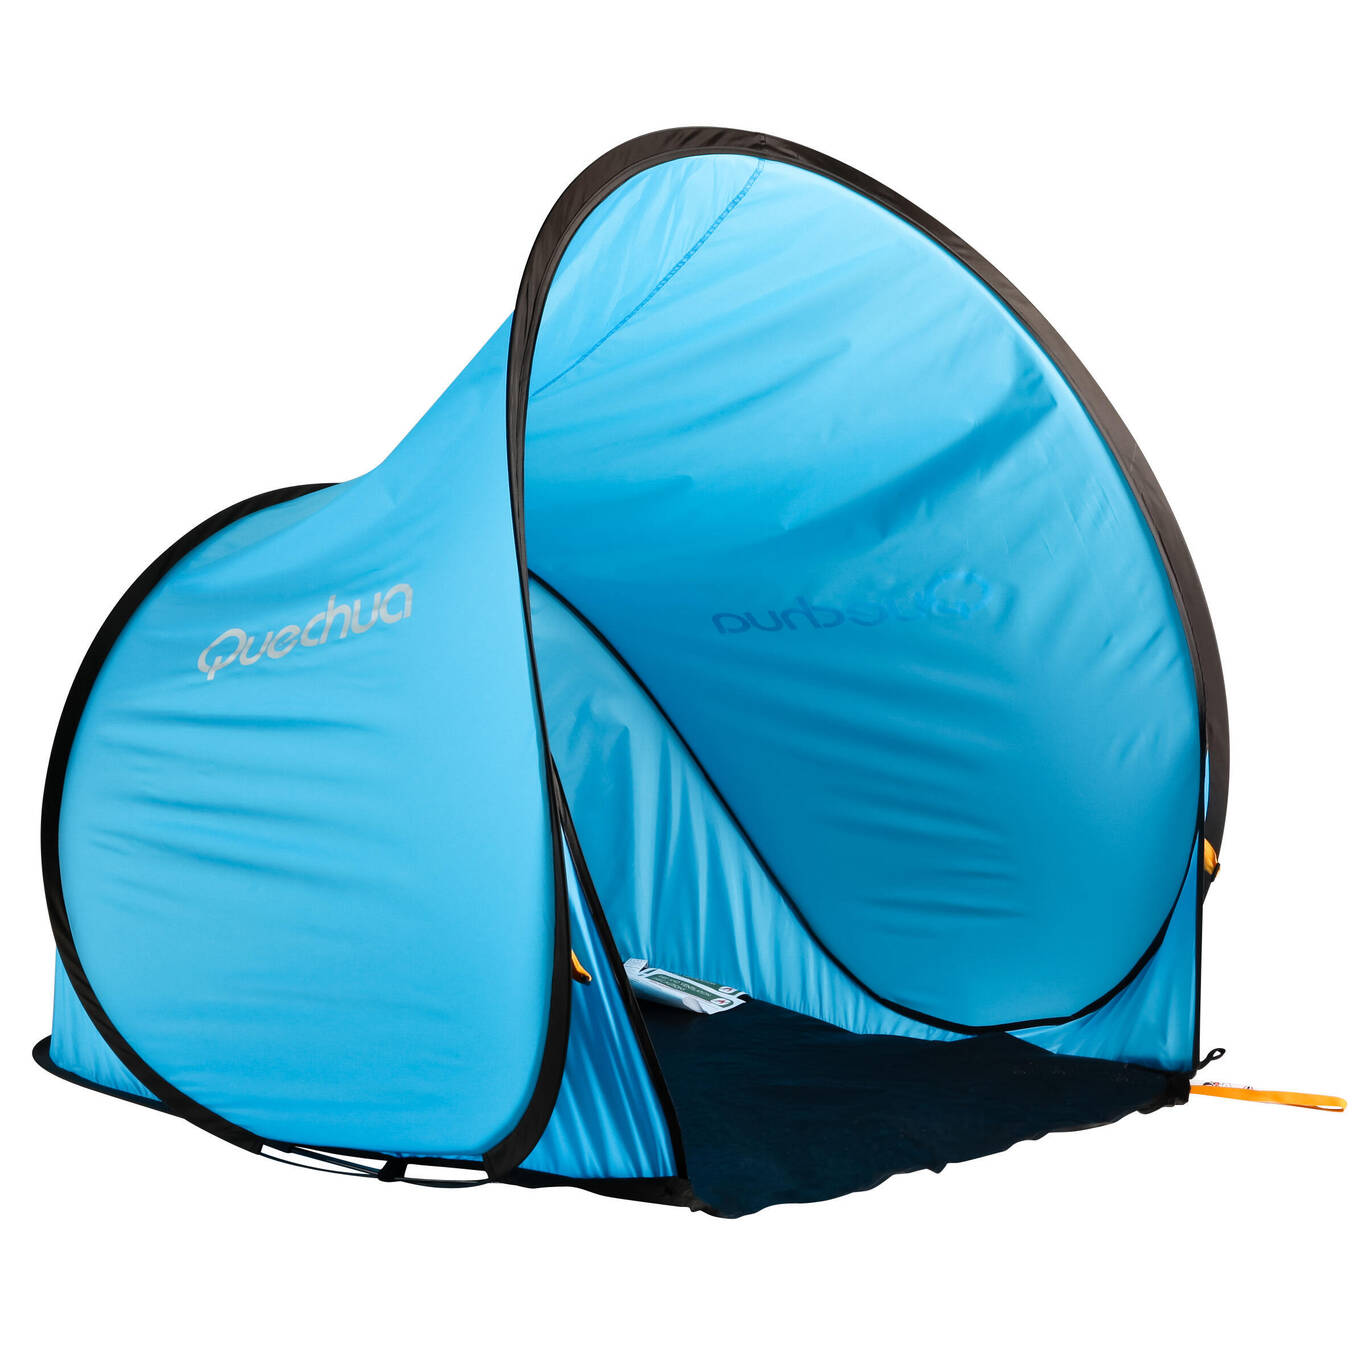 Tenda Shelter Instan 2 Second - 1 Dewasa / 2 Anak